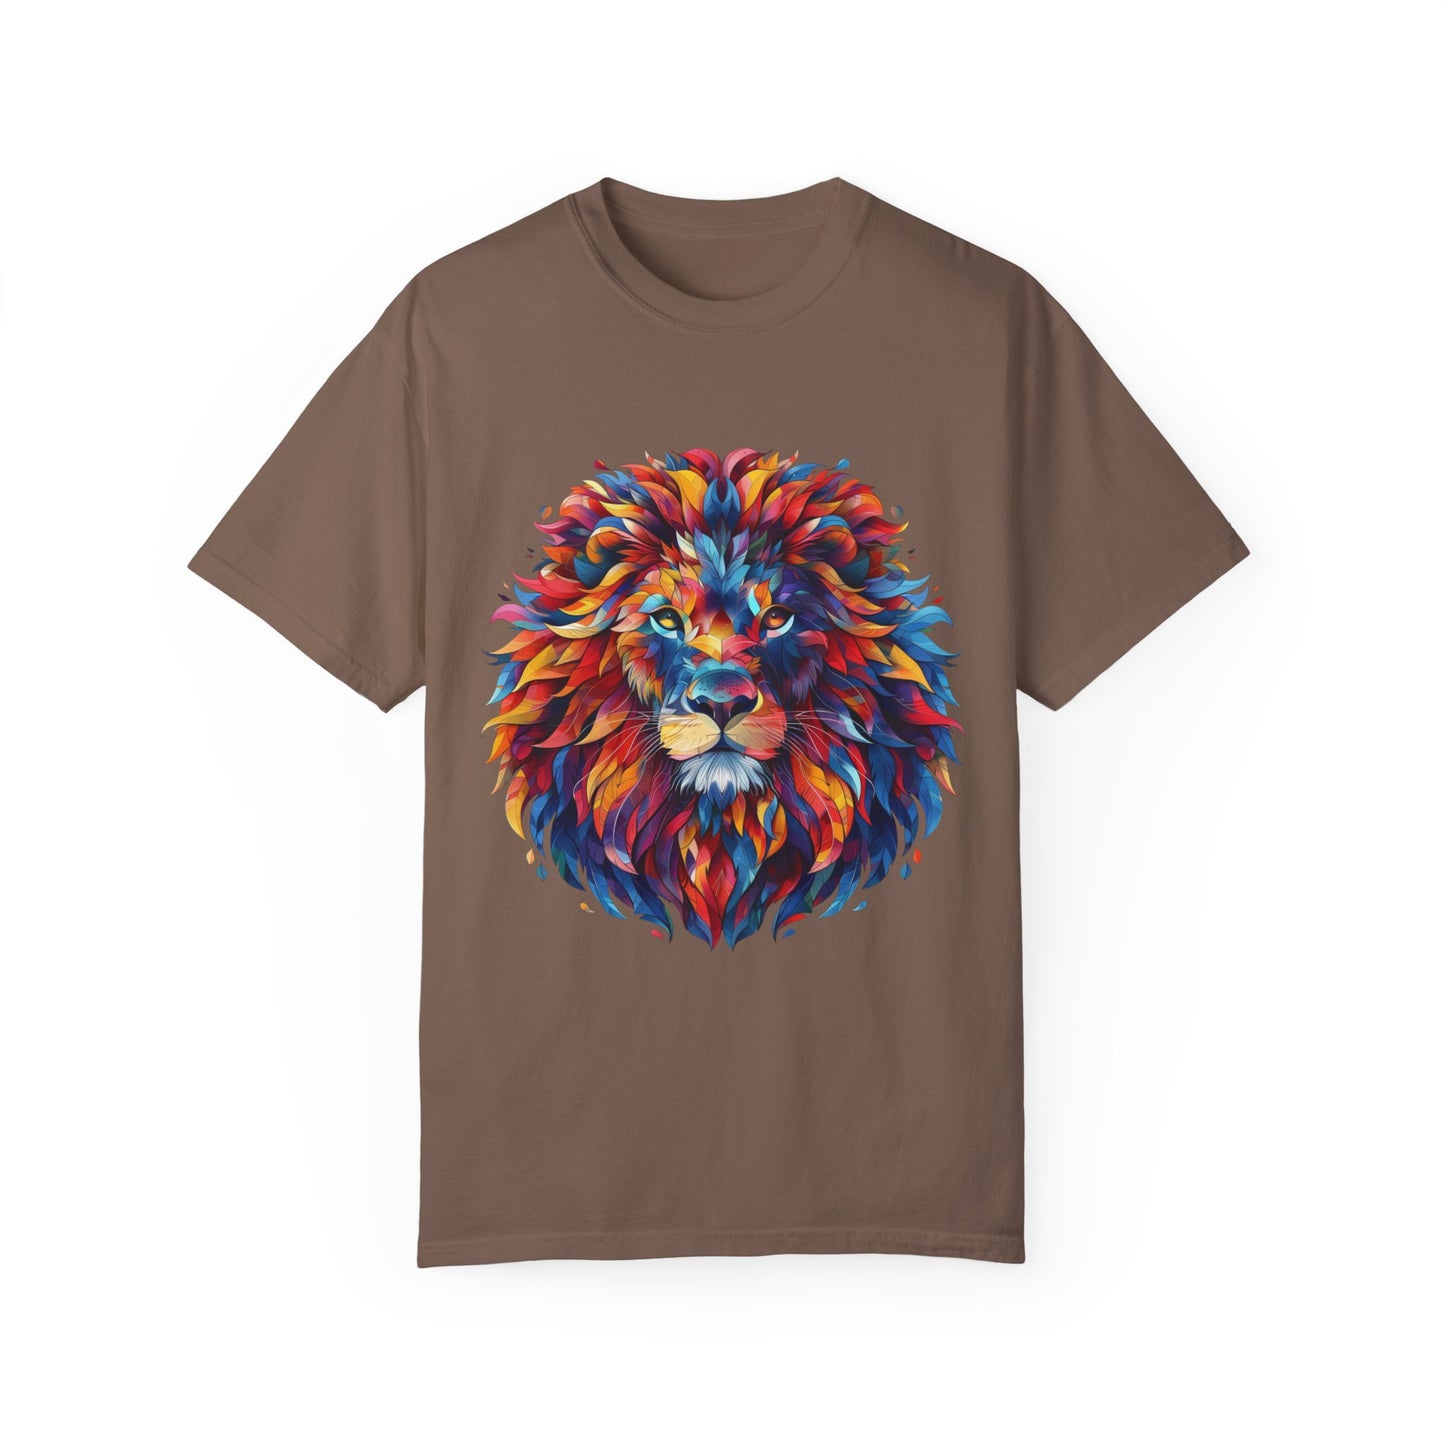 Lion Head Cool Graphic Design Novelty Unisex Garment-dyed T-shirt Cotton Funny Humorous Graphic Soft Premium Unisex Men Women Espresso T-shirt Birthday Gift-15